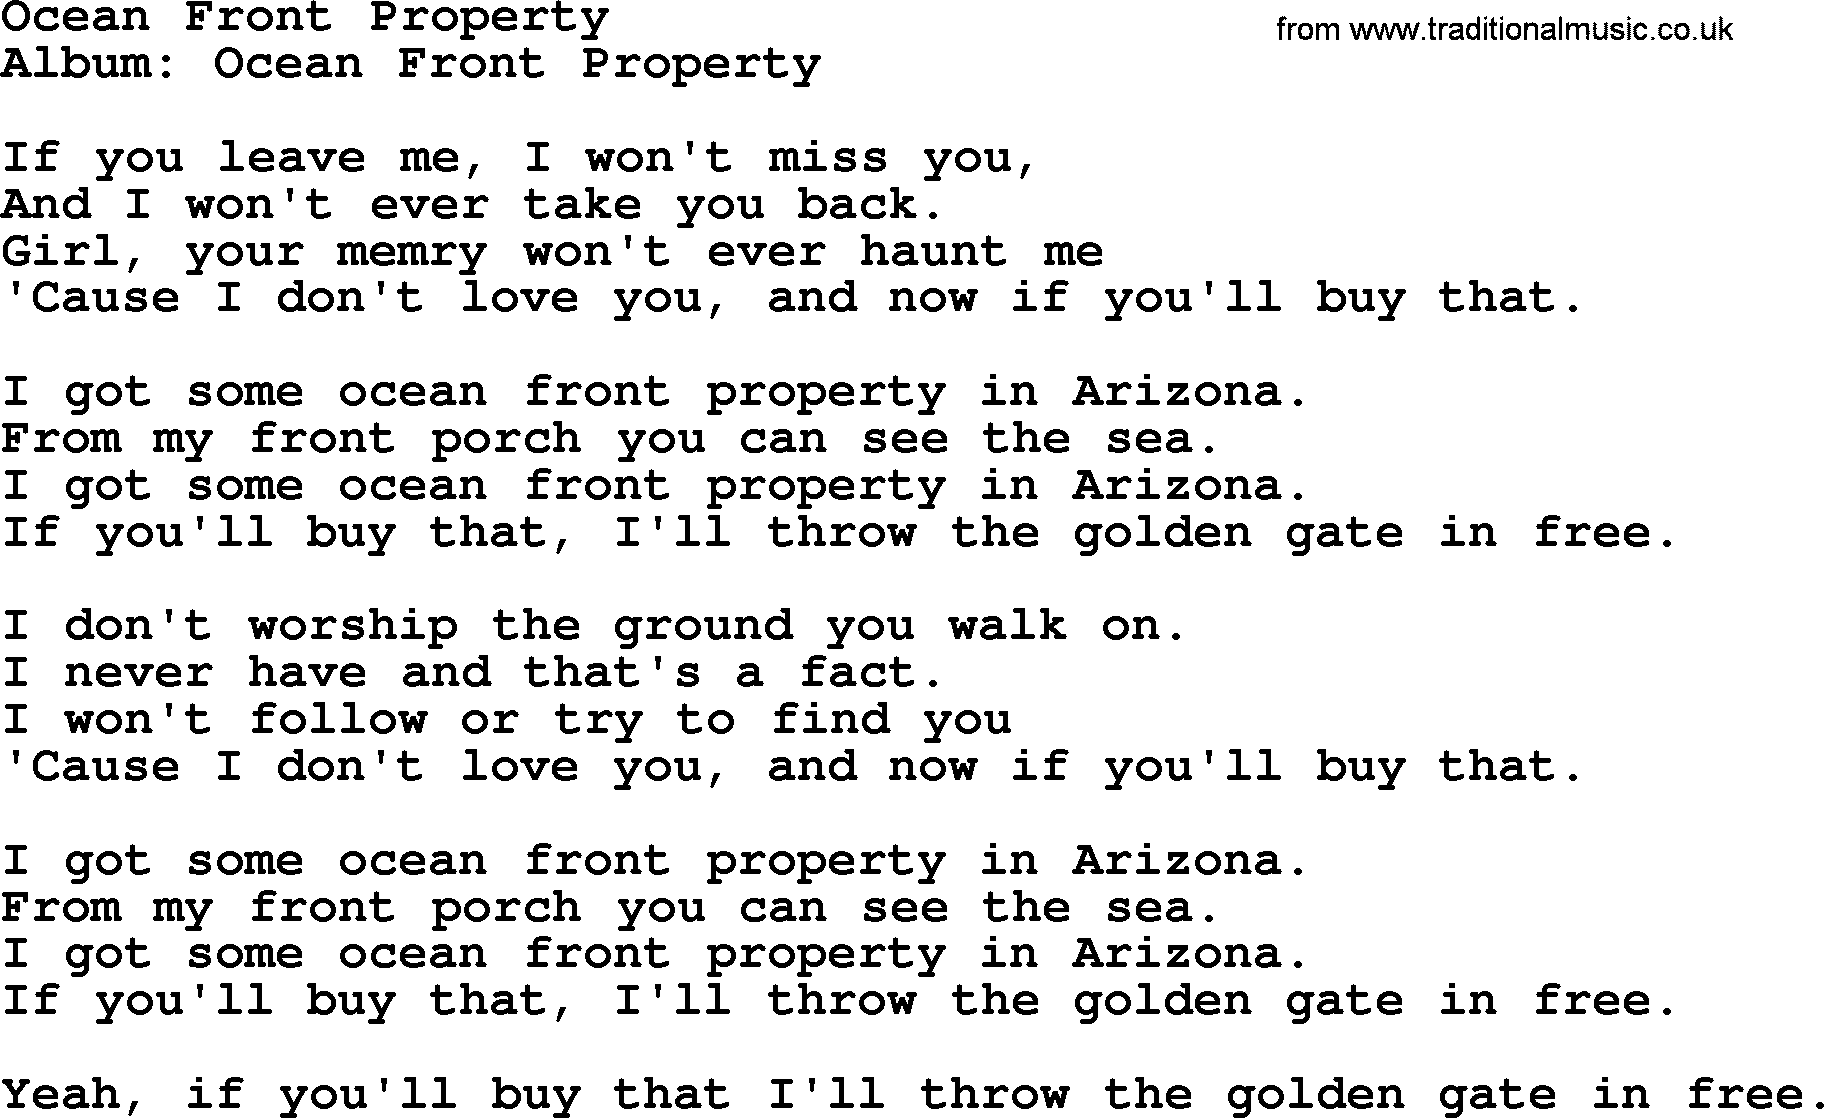 George Strait song: Ocean Front Property, lyrics